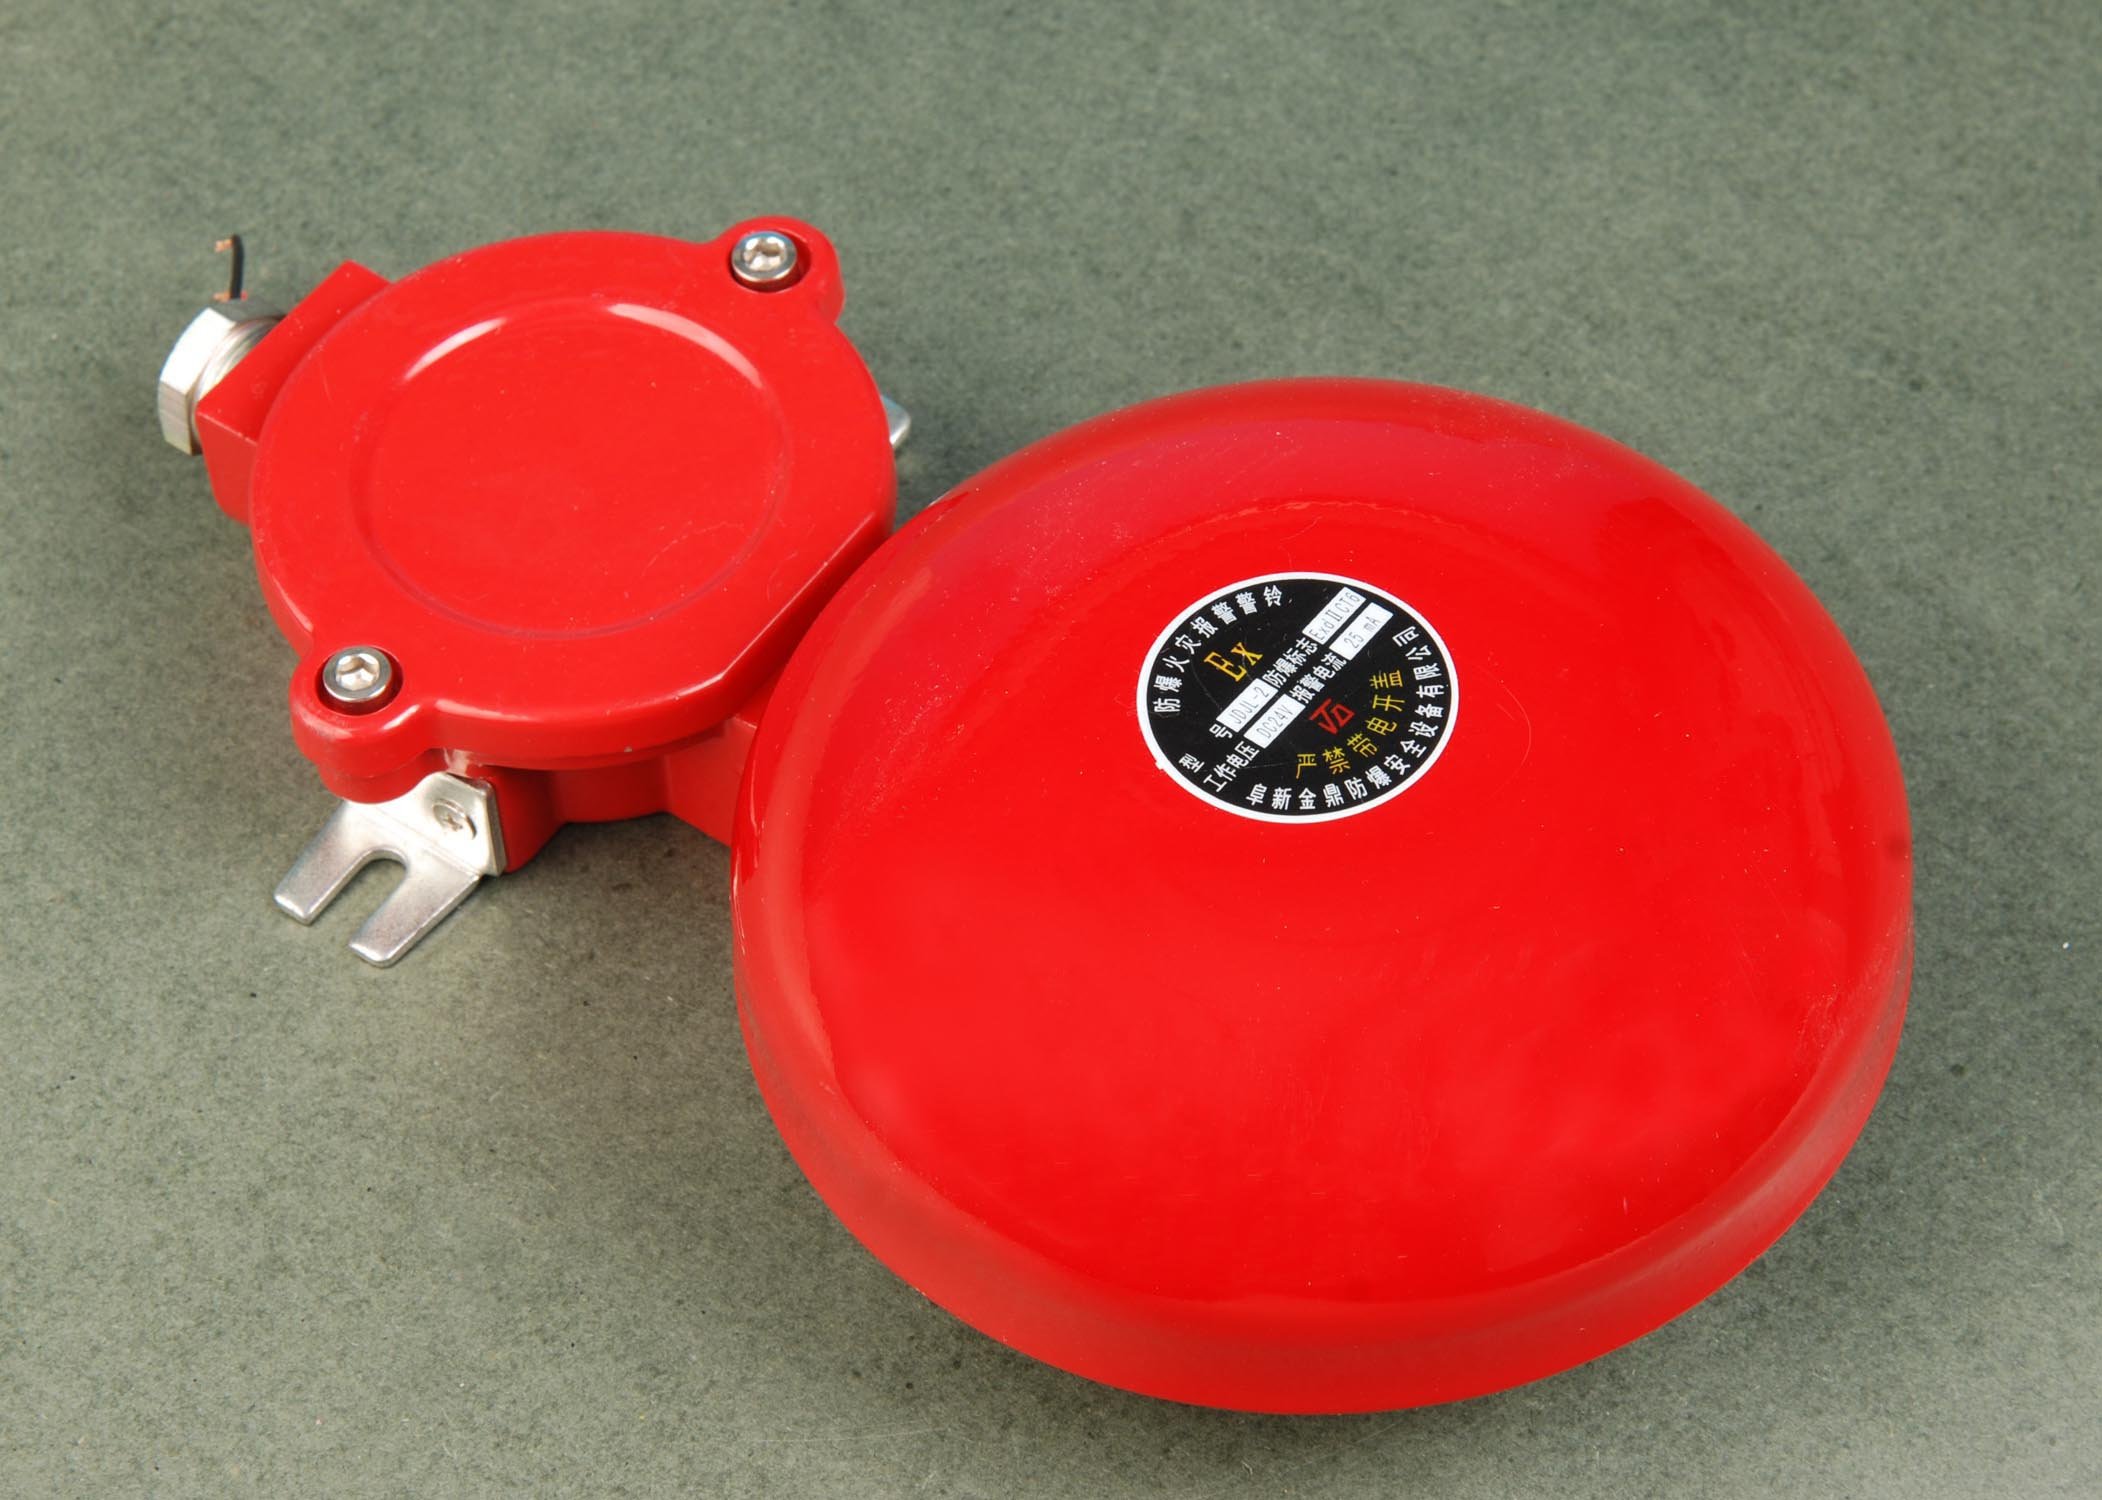 http://www.vedardalarm.com/explosion-proof-alarm-bell-fire-sounder-audio-alarm-hooter-p-210